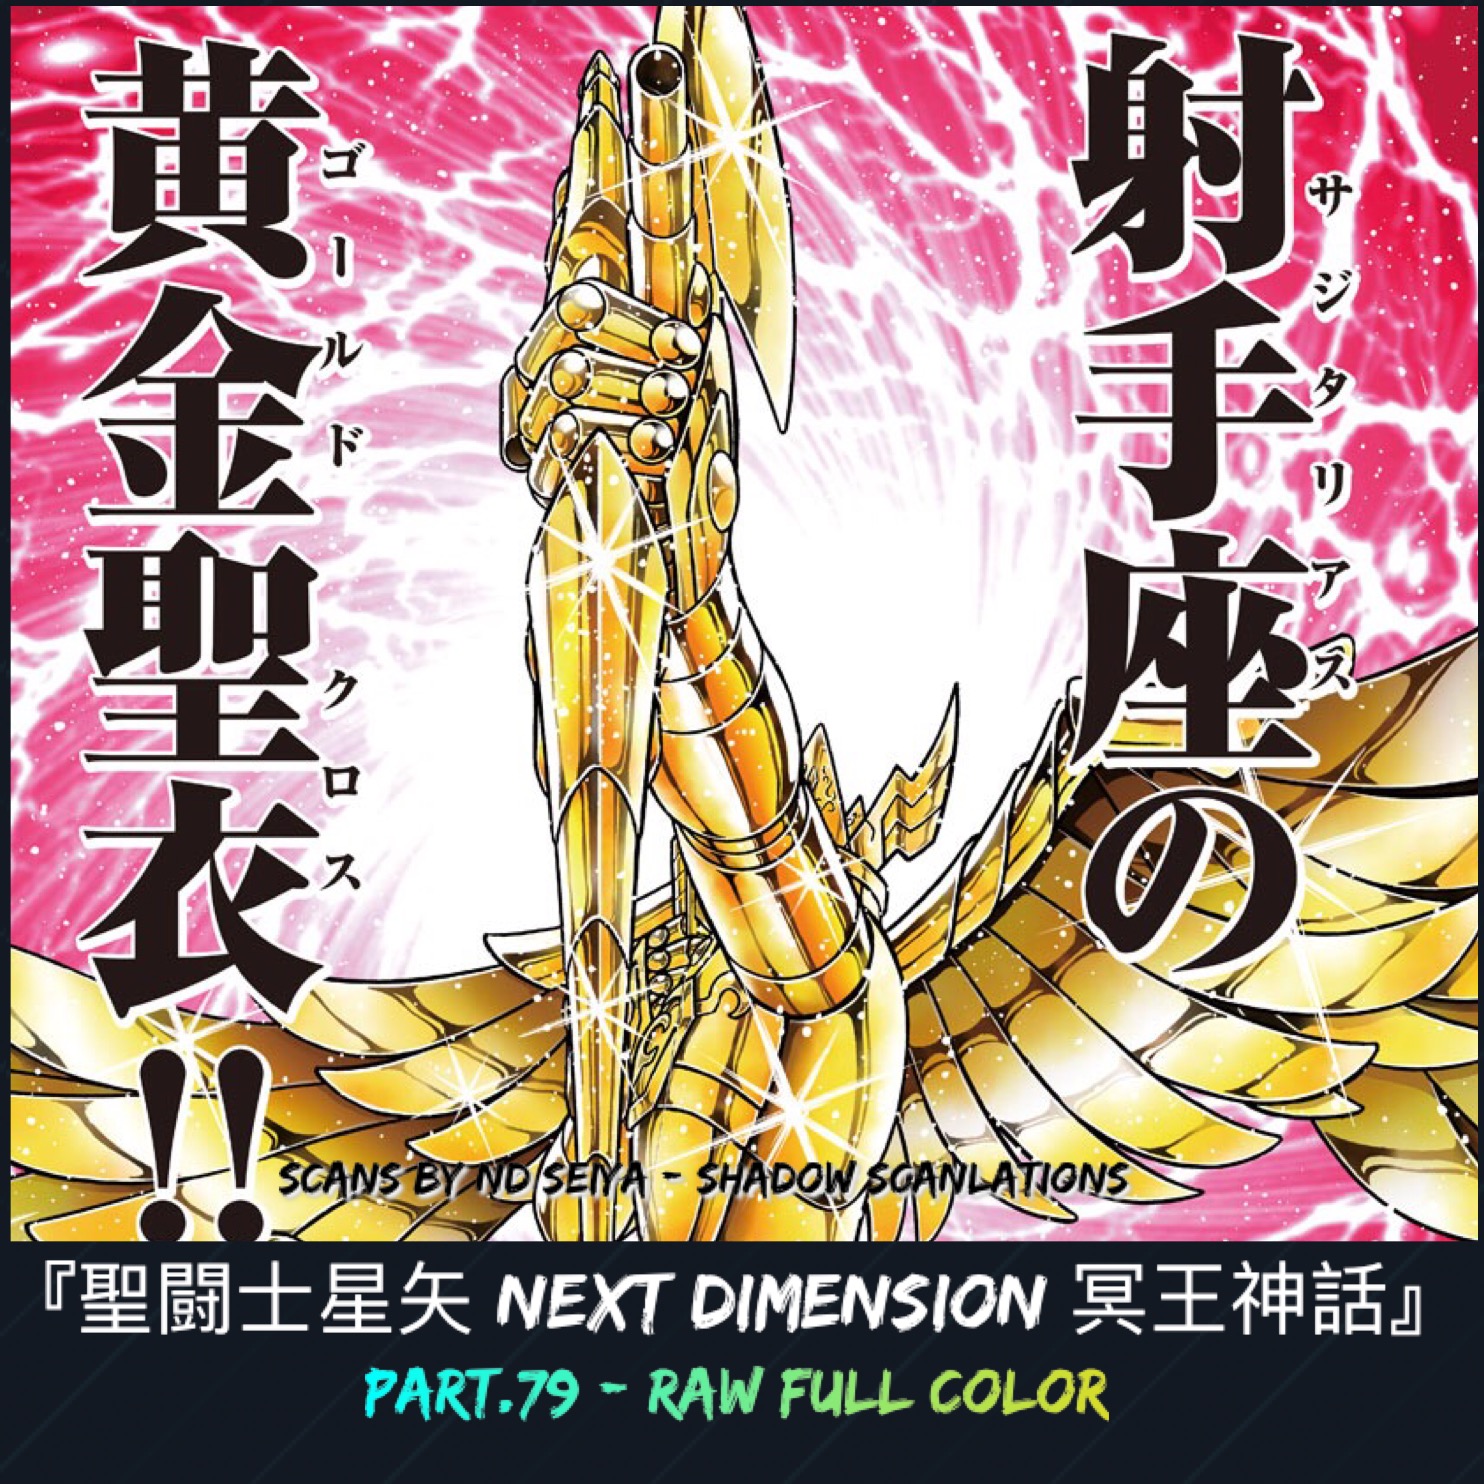 Saint Seiya Next Dimension Part 79 Raws Full Color By Nd Seiya